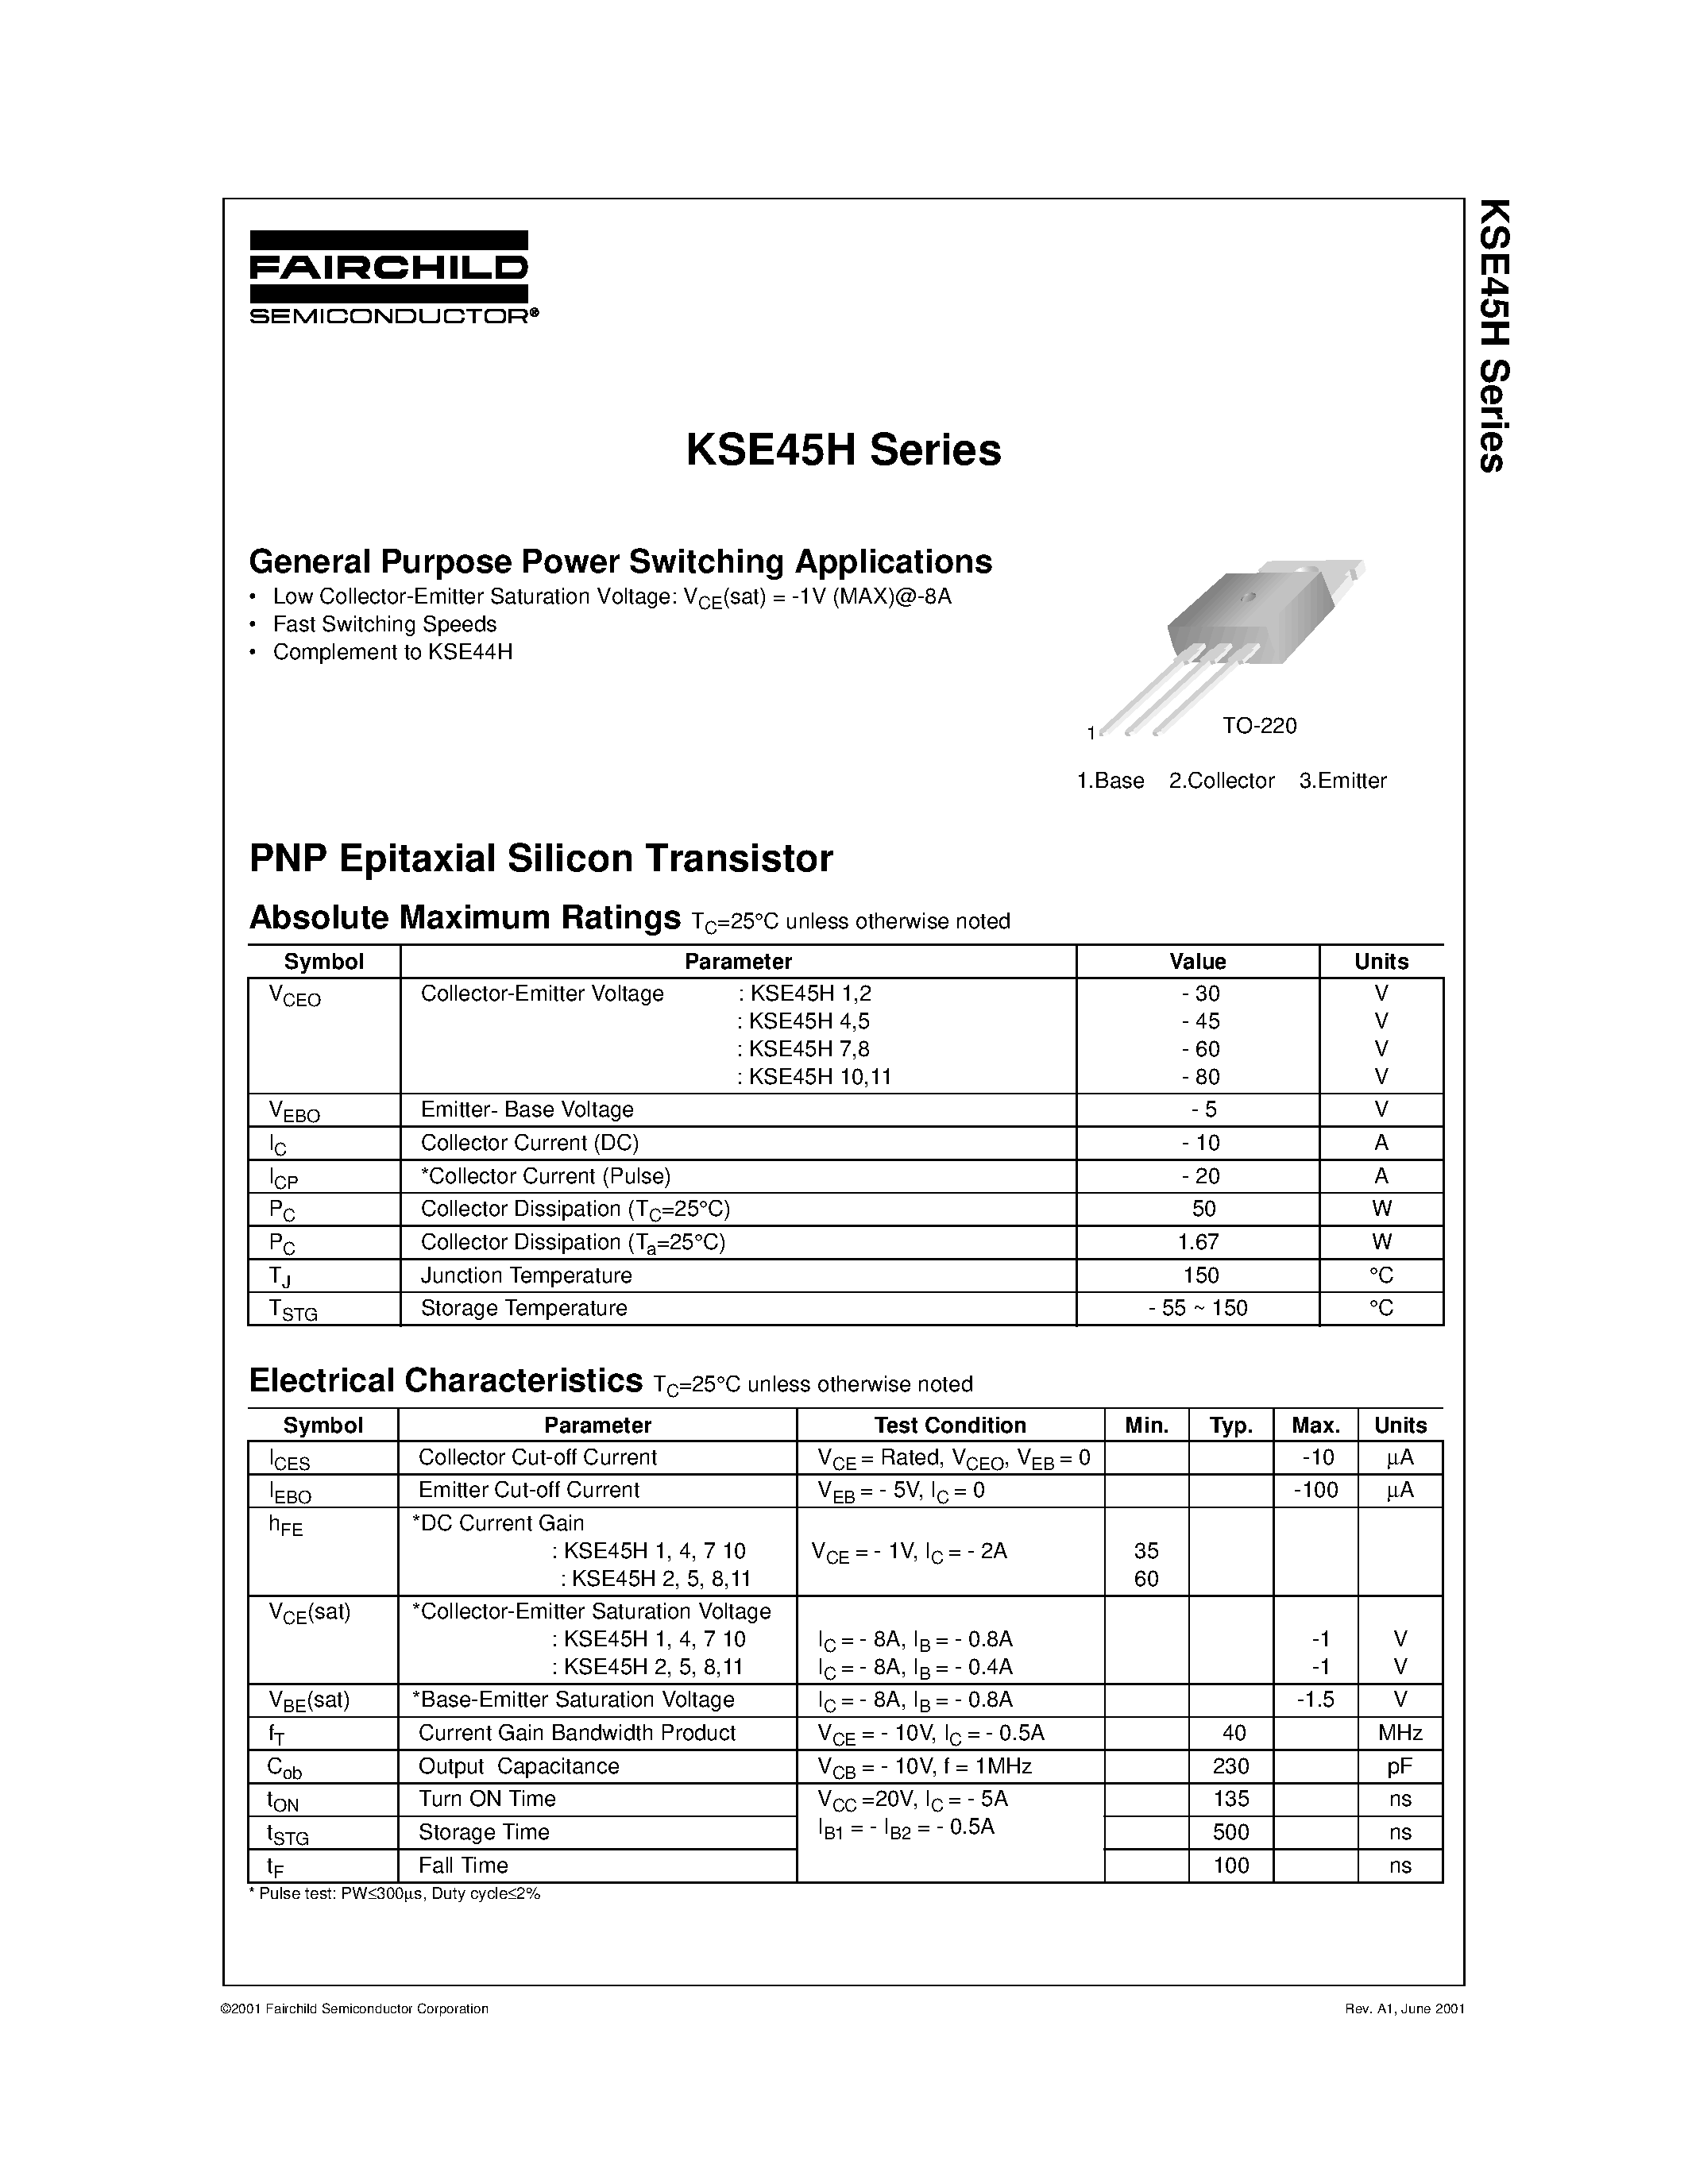 Datasheet KSE45H5 - General Purpose Power Switching Applications page 1